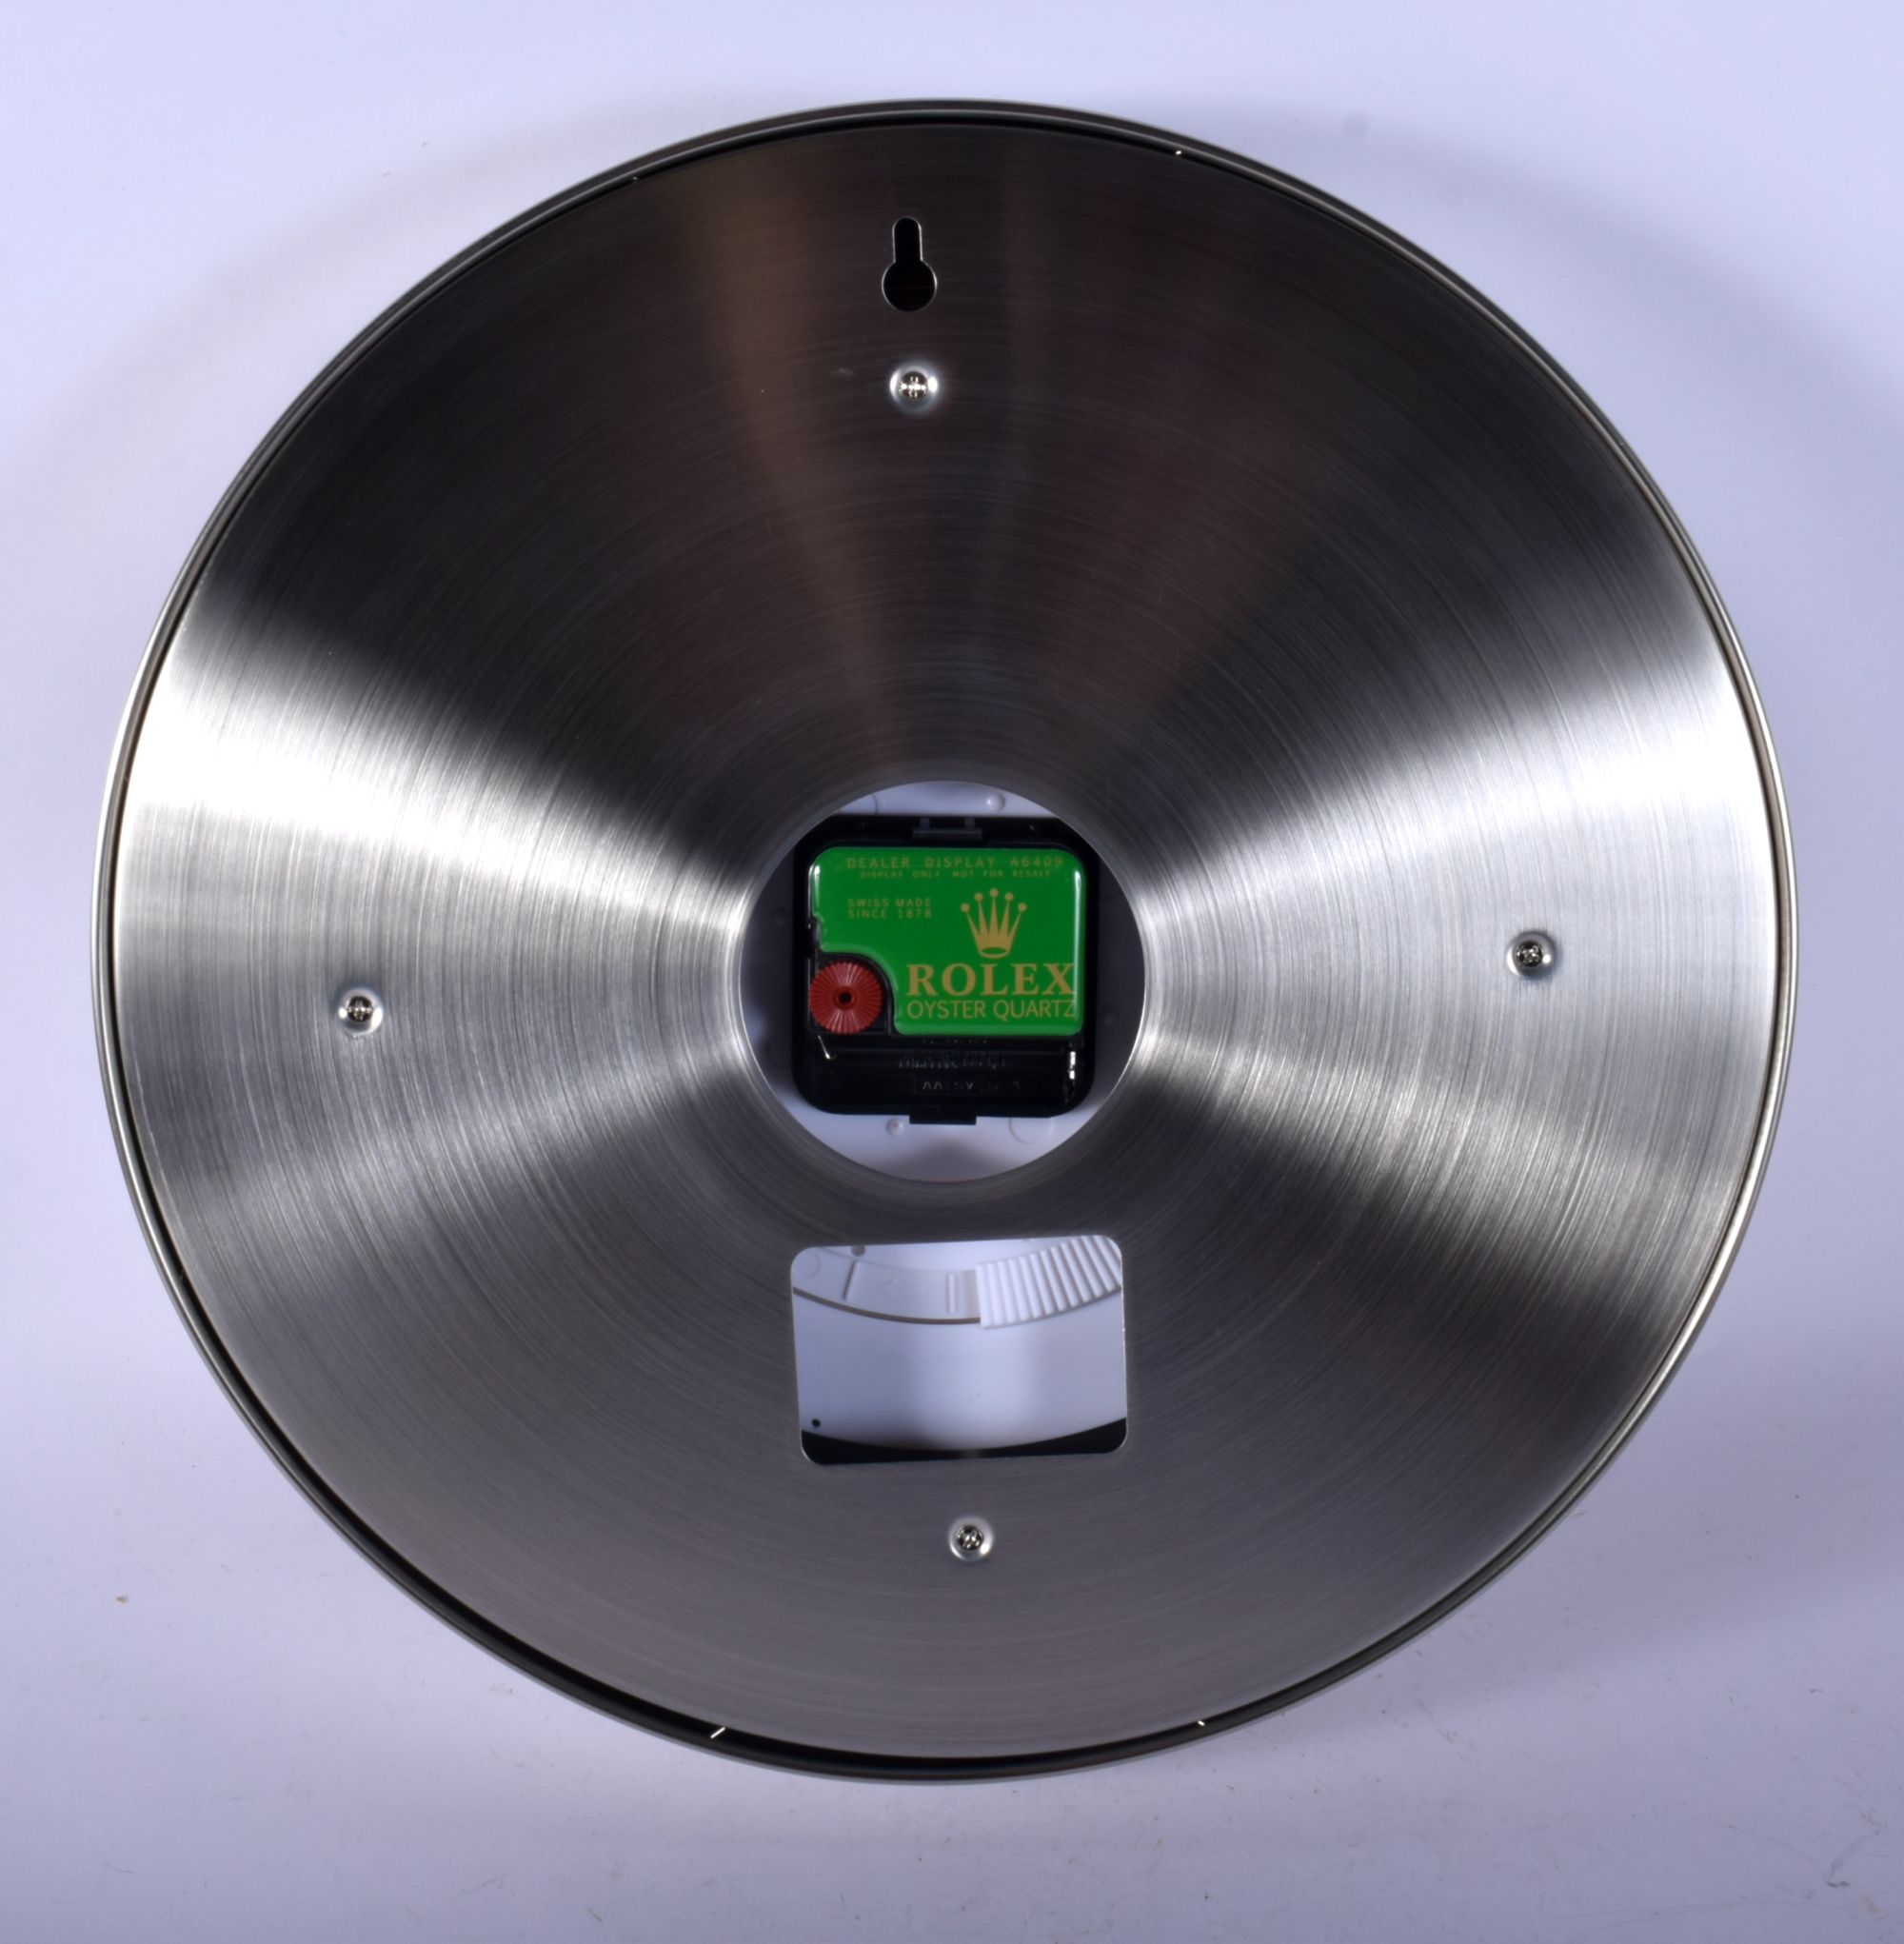 A ROLEX ADVERTISING DEALER DISPLAY HANGING WALL CLOCK. 30 cm diameter. - Image 2 of 2